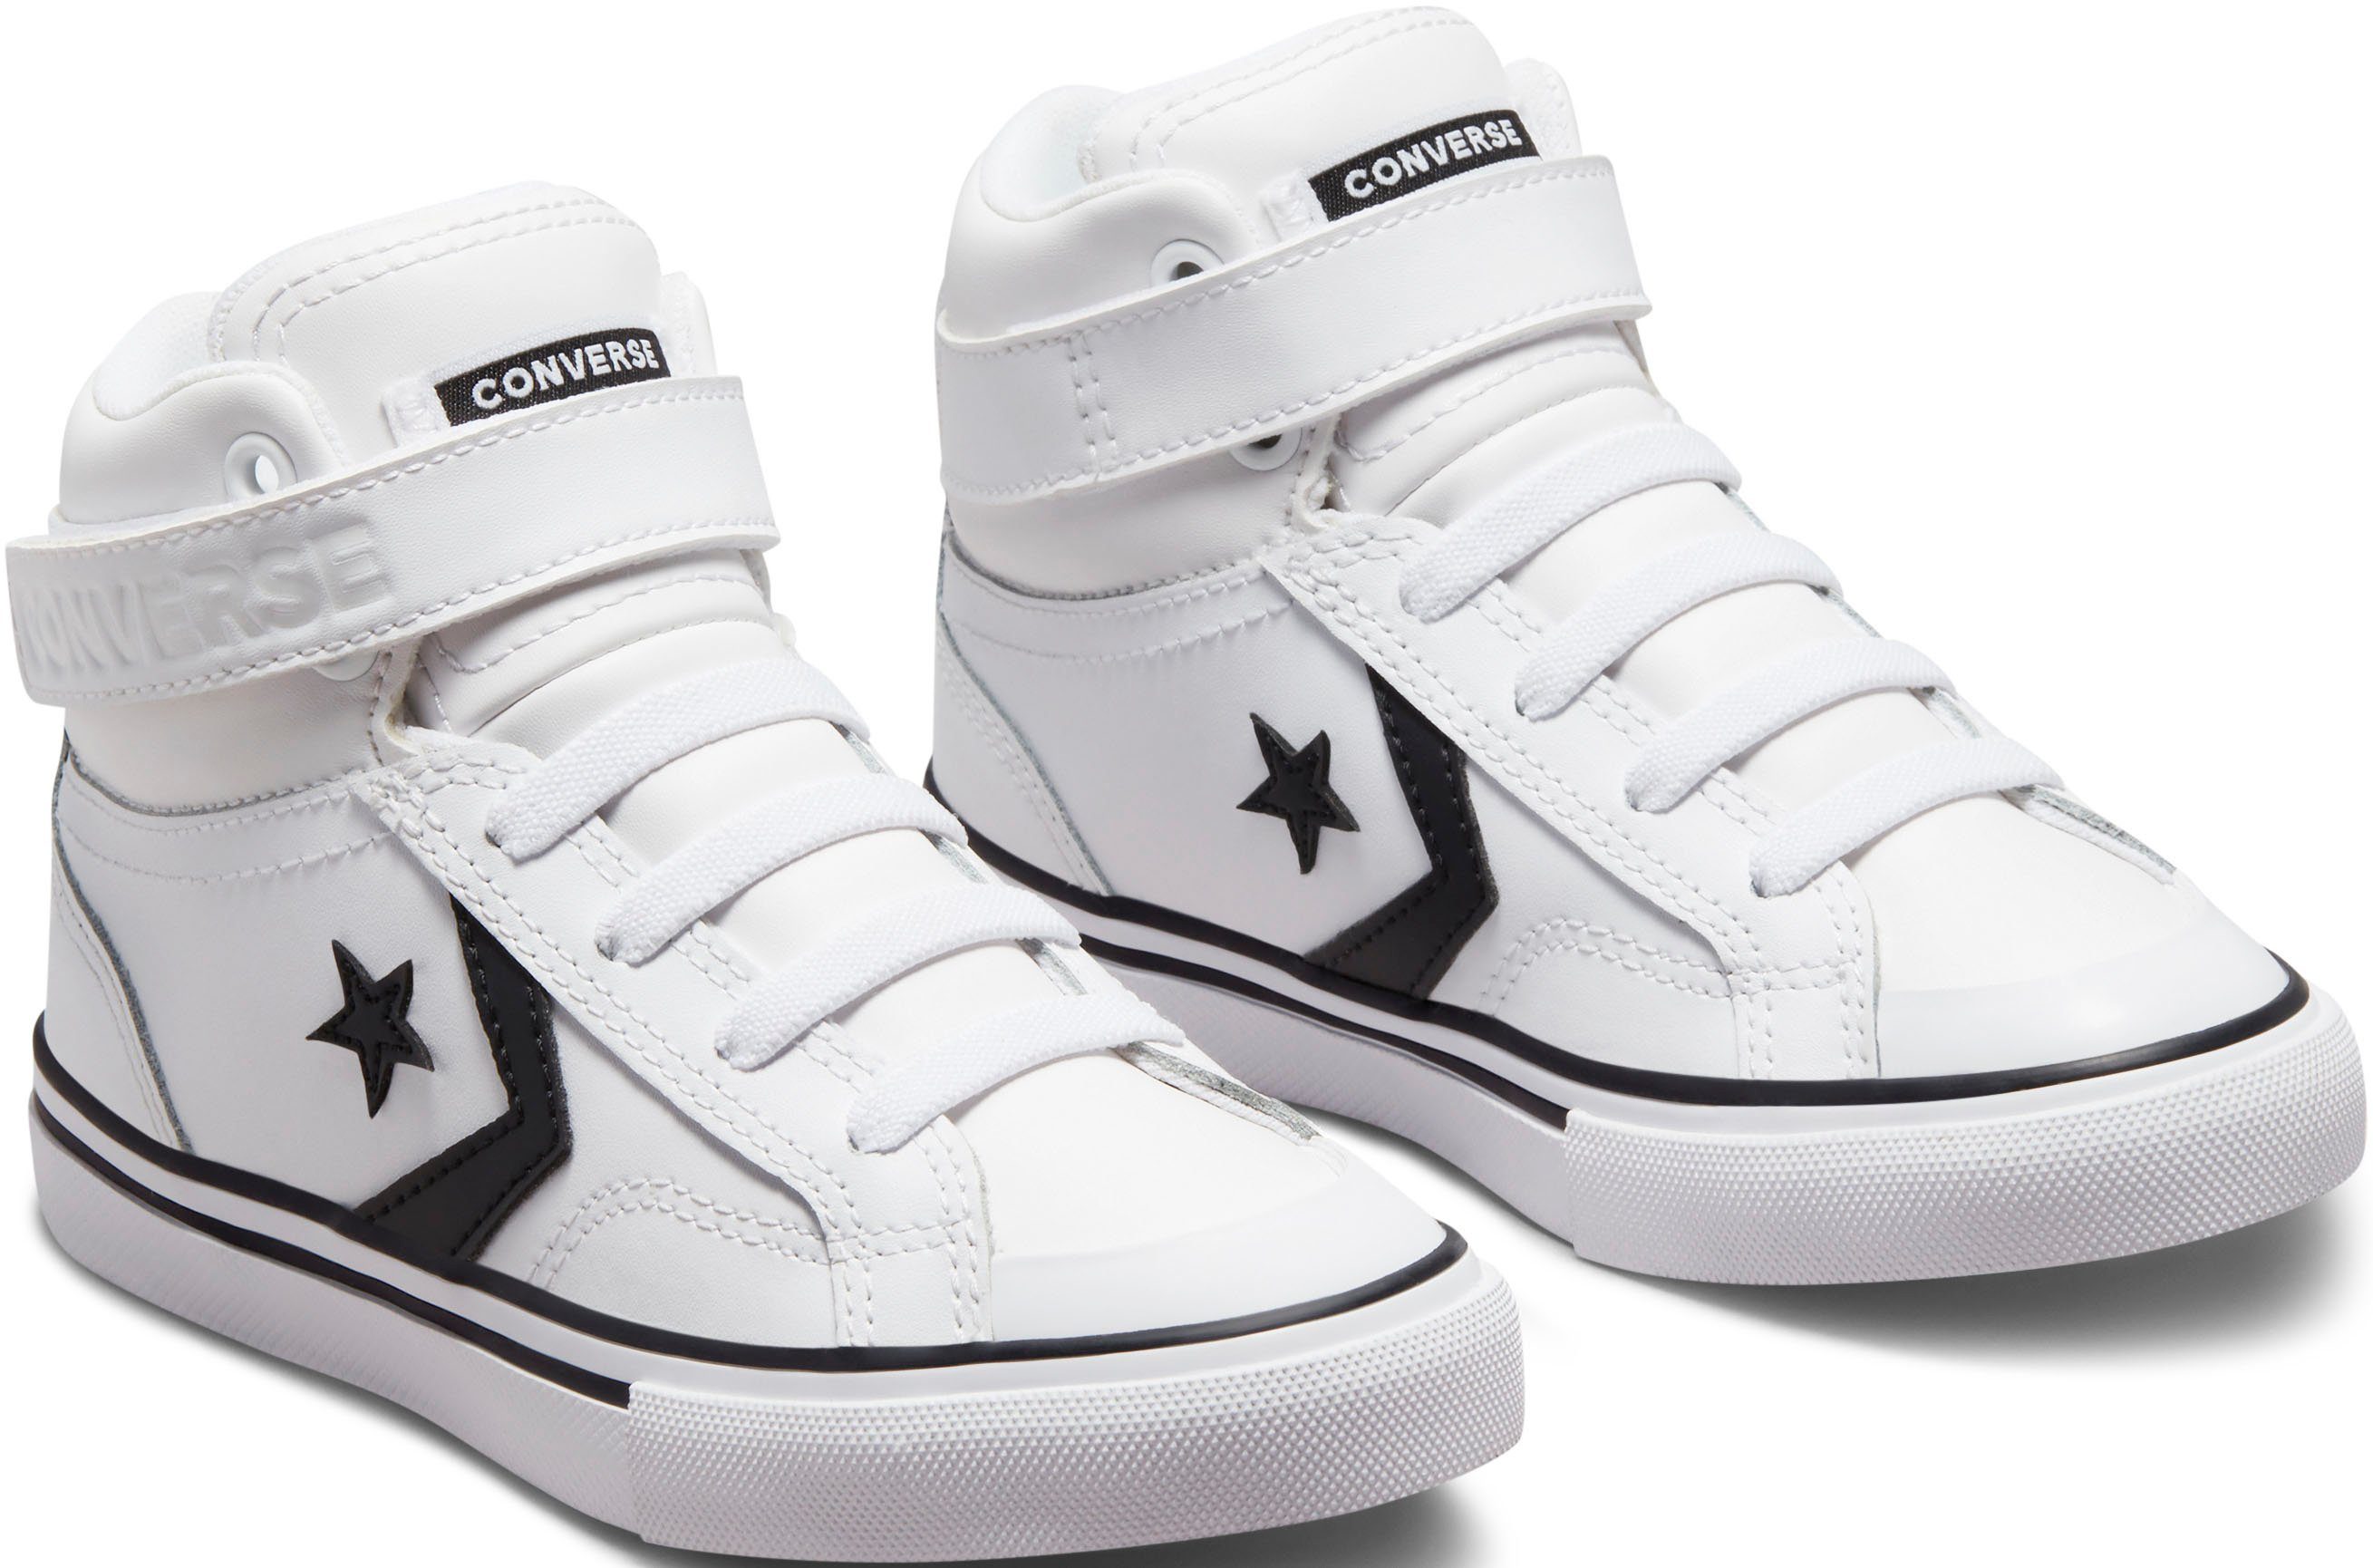 Converse STRAP PRO LEATHER Sneaker BLAZE weiß-schwarz